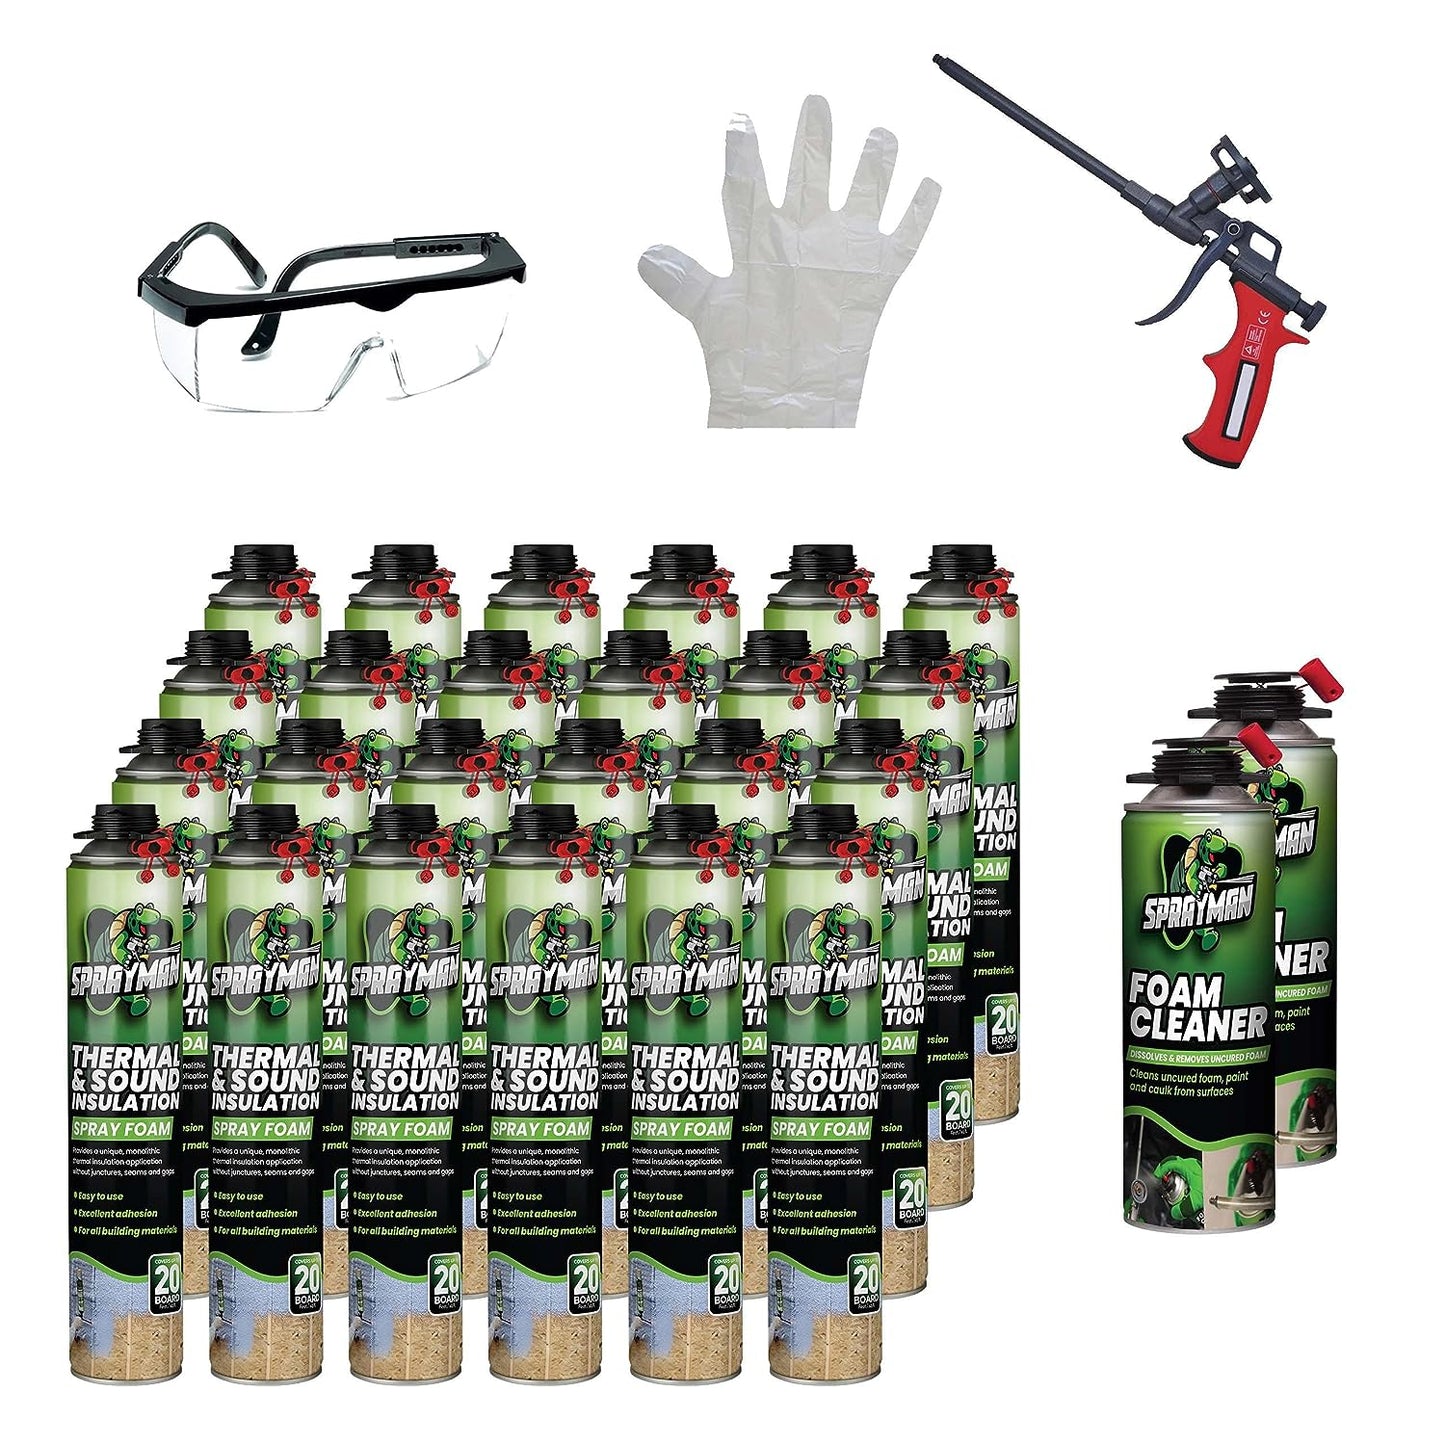 Sprayman Thermal & Sound Insulation Spray Foam 24 Can + 2 Foam Cleaner + Foam Gun +Eye Protection + Glove